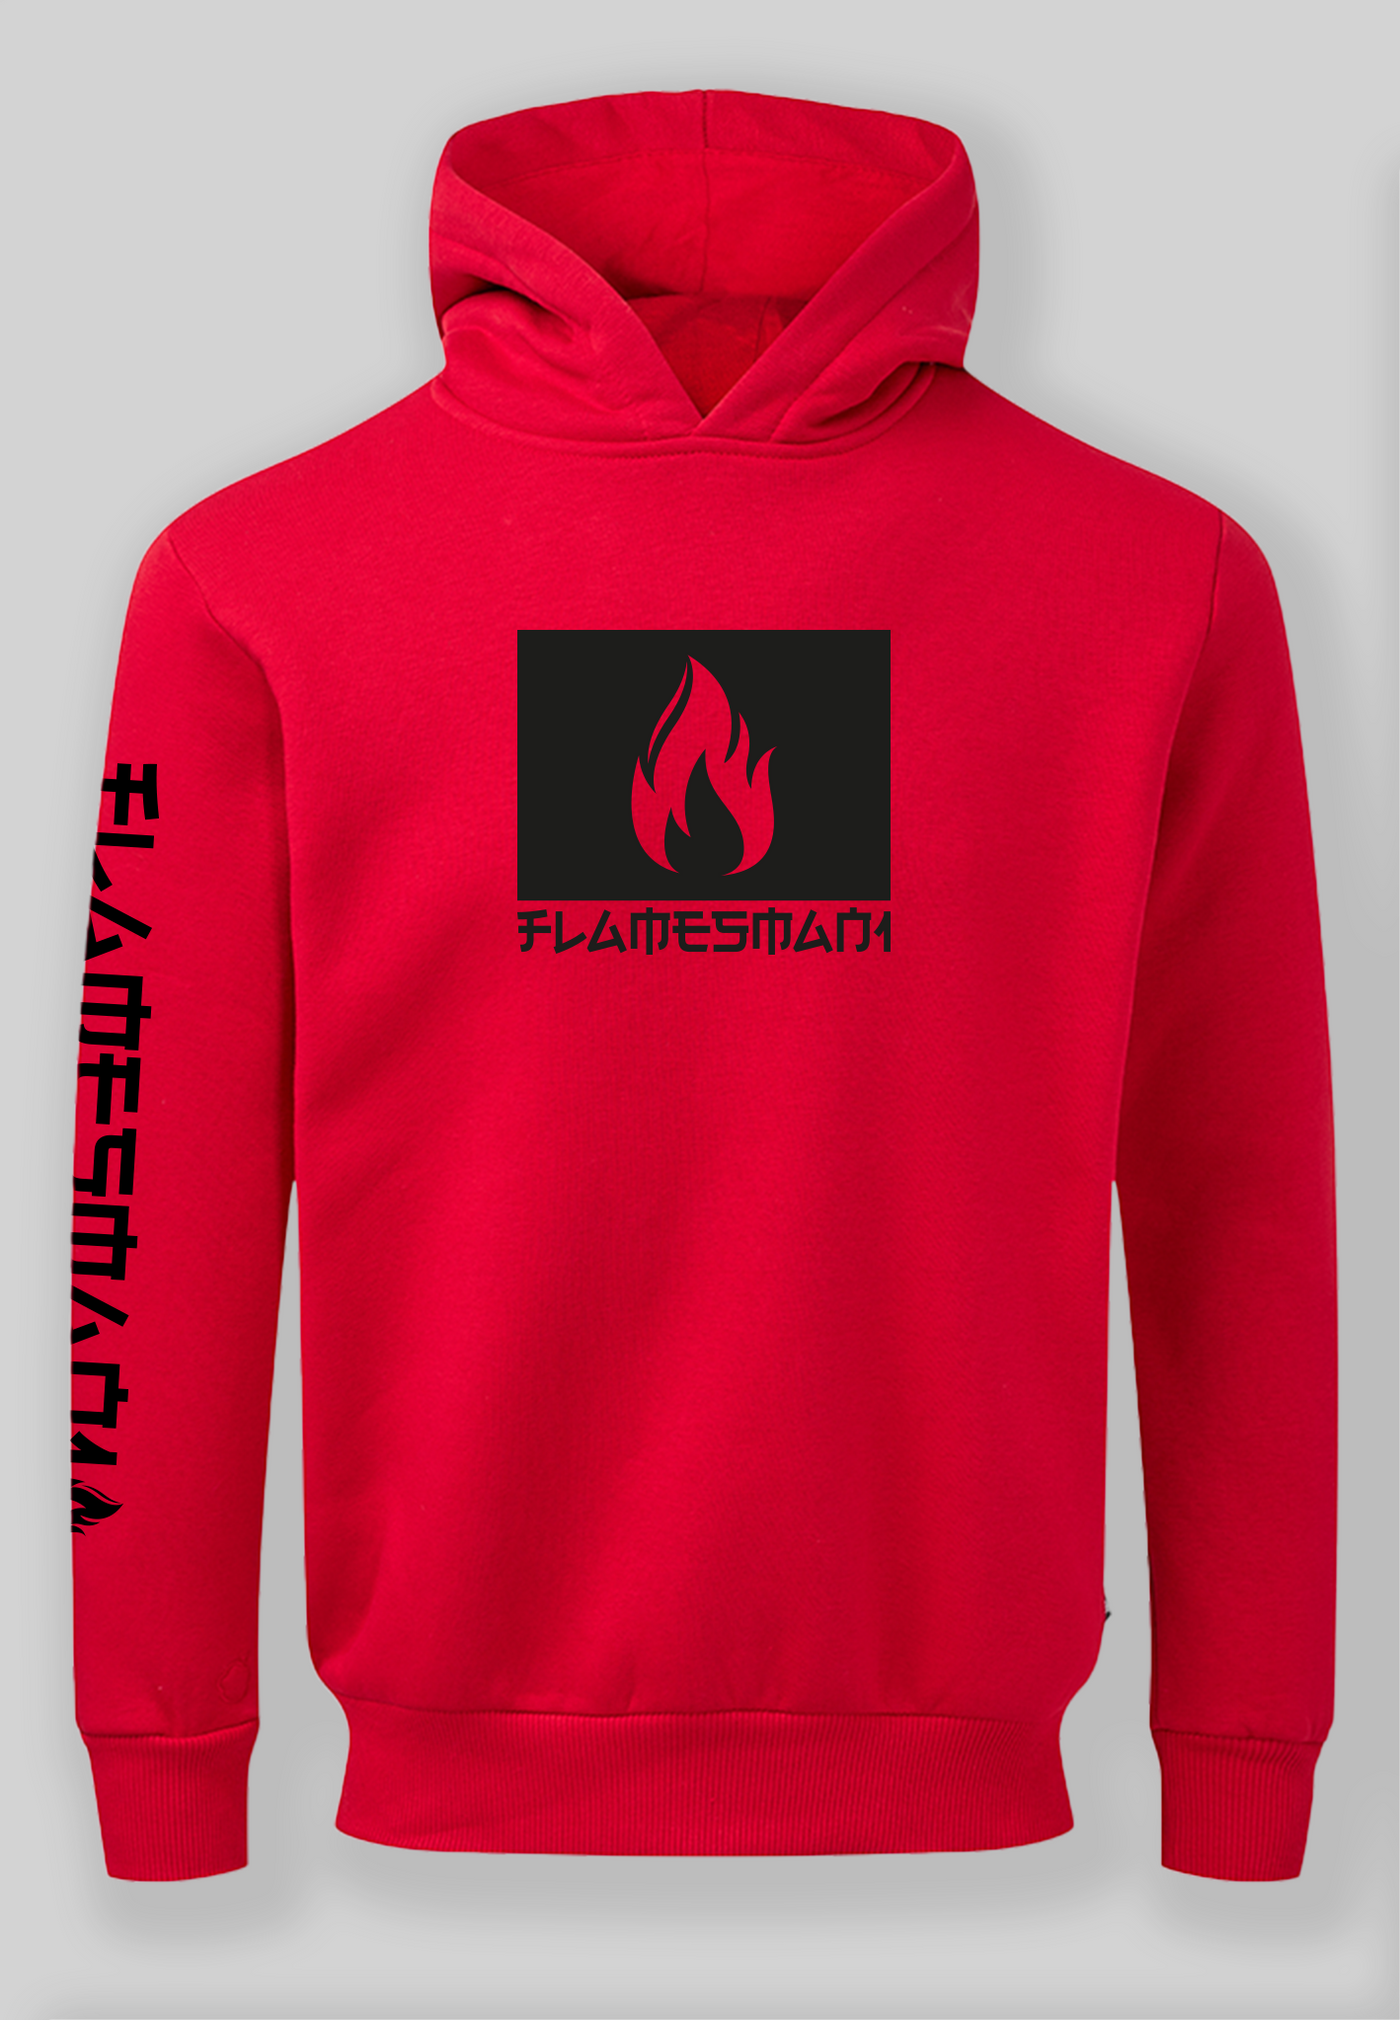 Flamesman1 - Fire 2.0 / Rød Hoodie